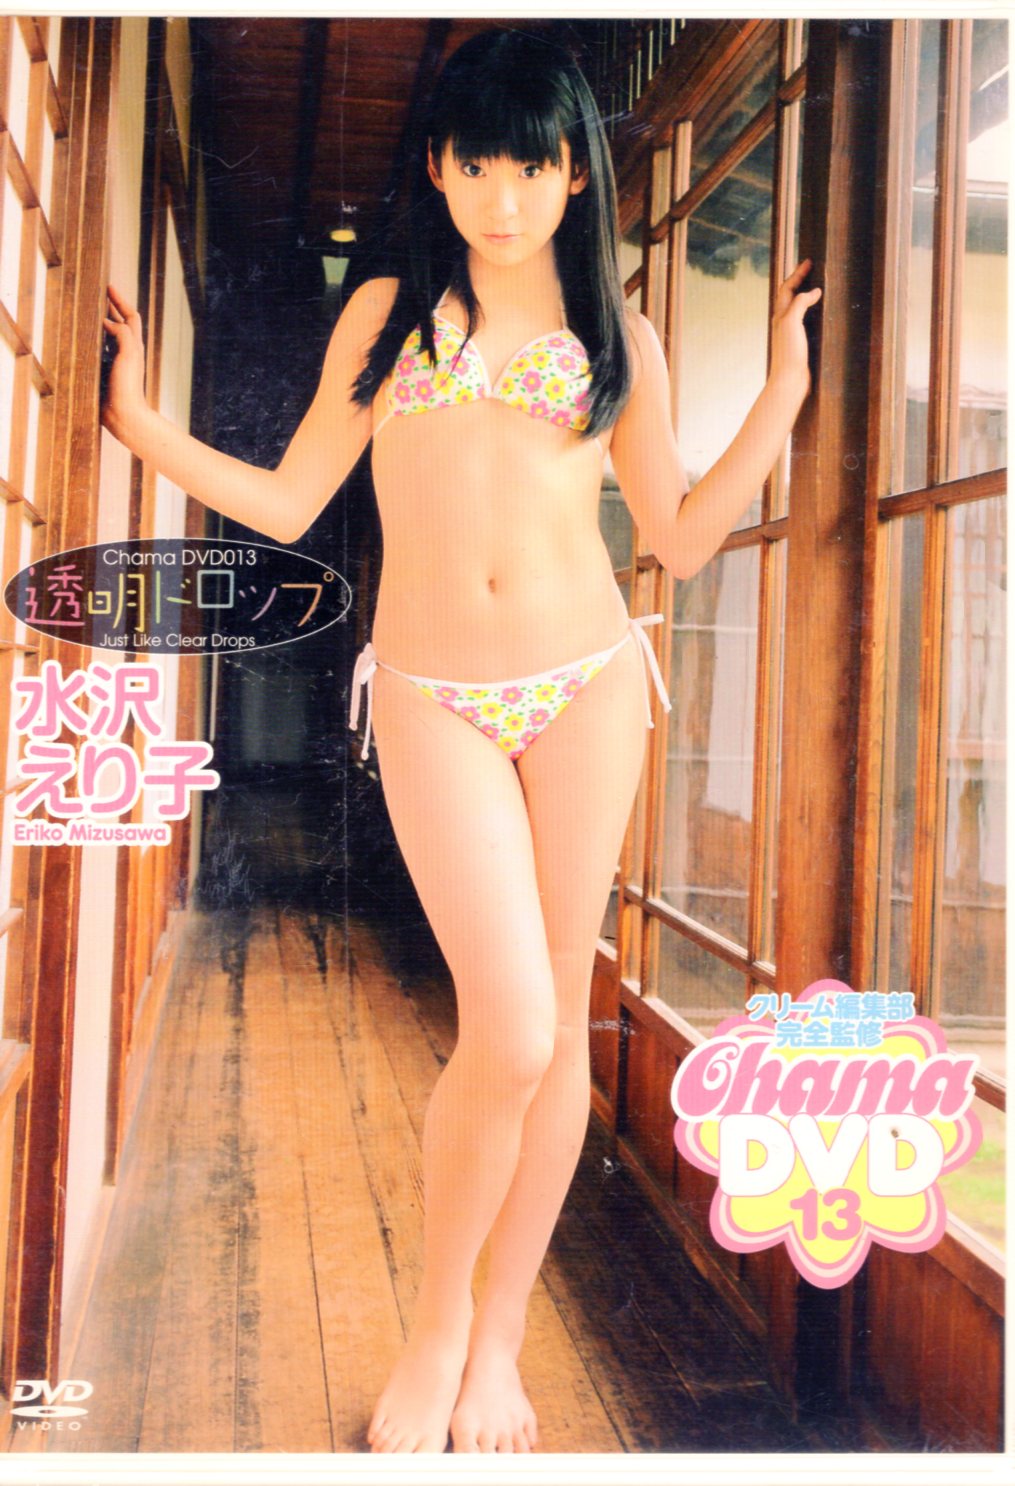 Wailea publication DVD Eriko Mizusawa Chama DVD 13 transparent drop Mandarake Online Shop